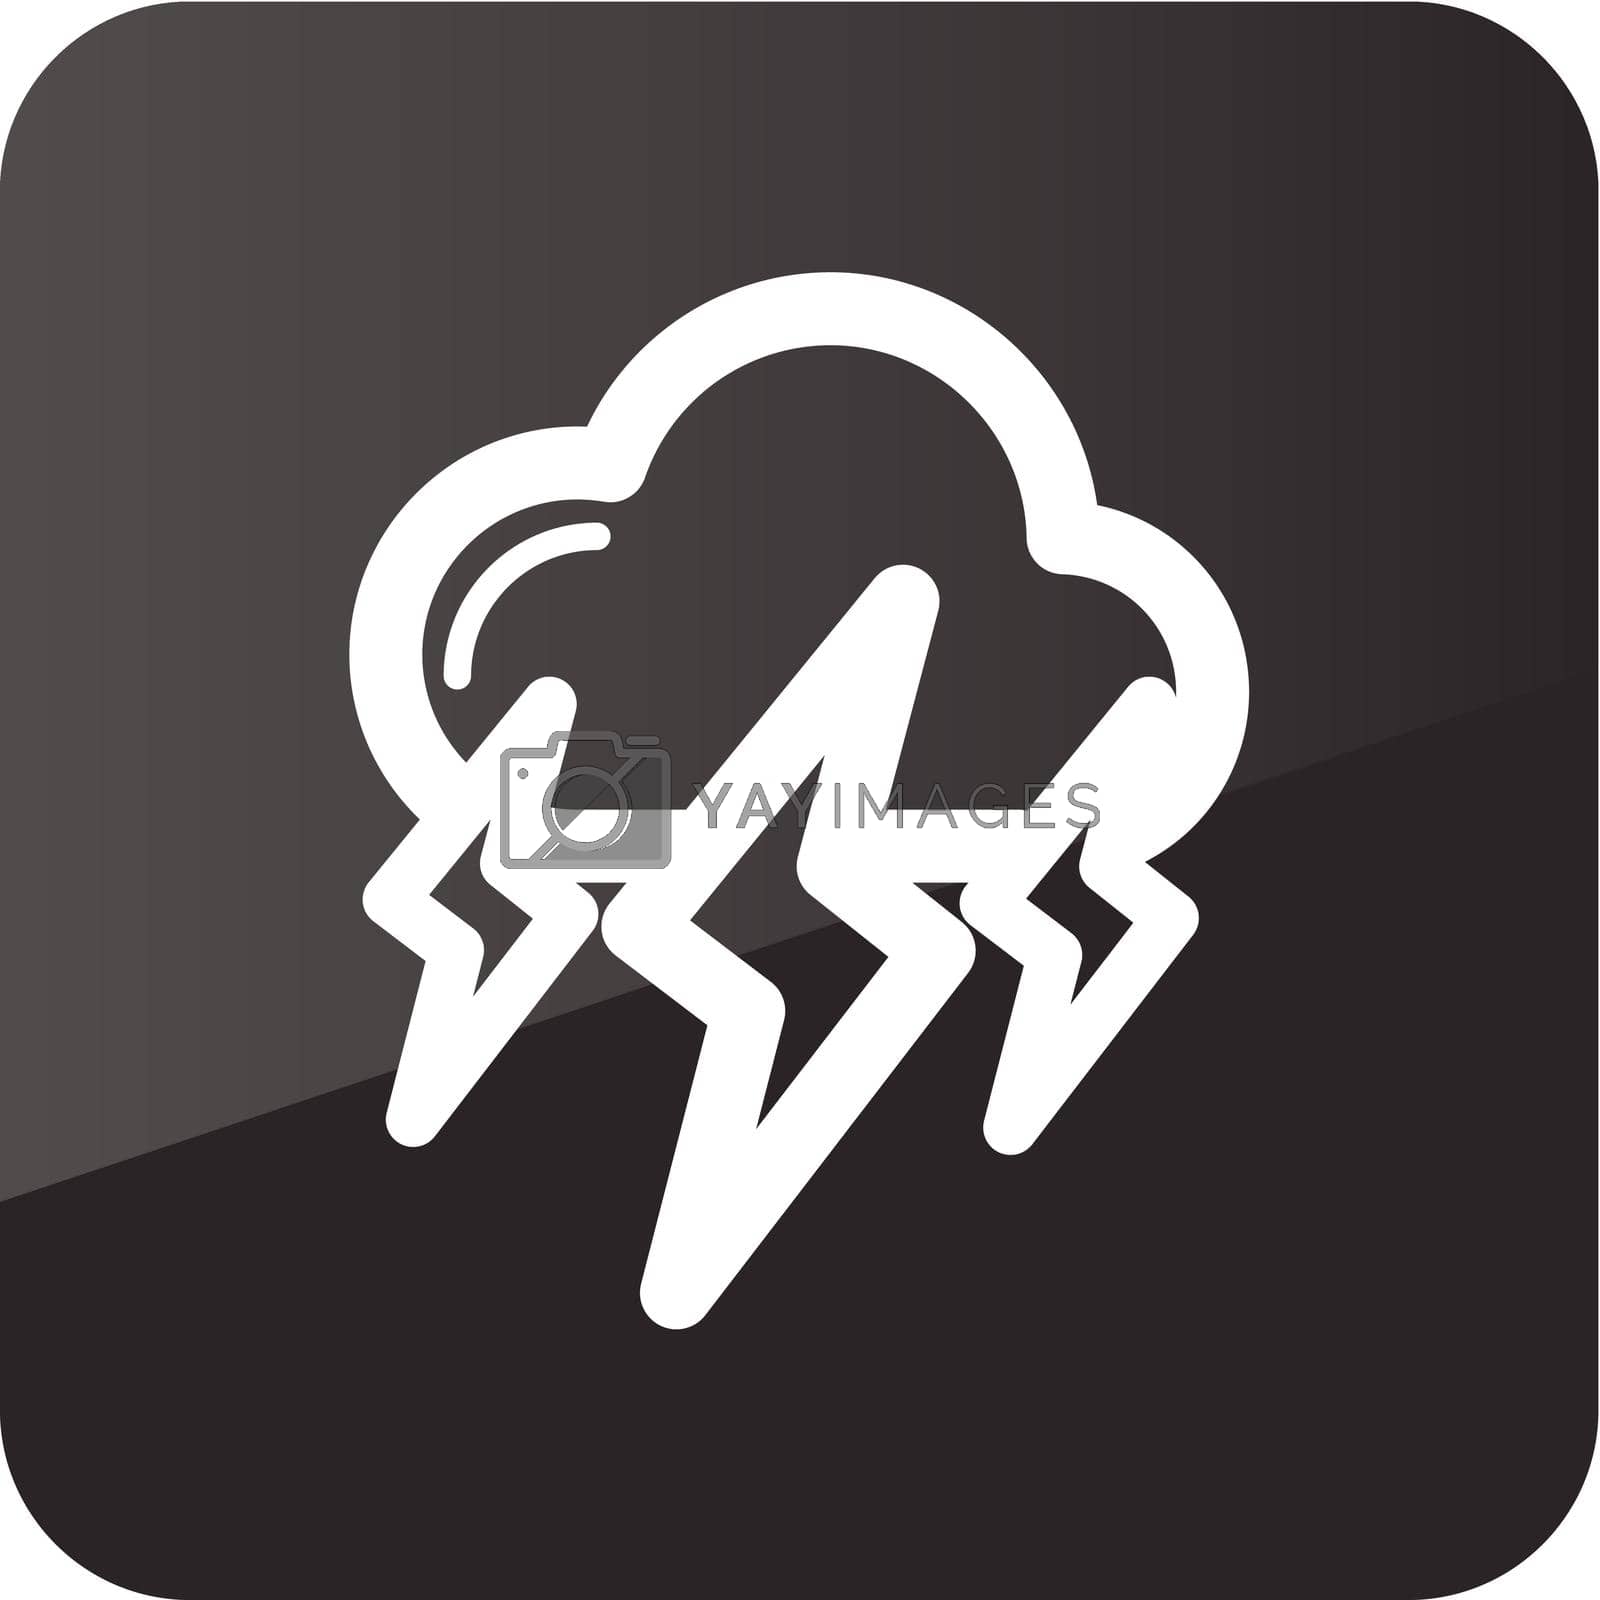 Storm Cloud Lightning outline icon. Meteorology. Weather. Vector illustration eps 10